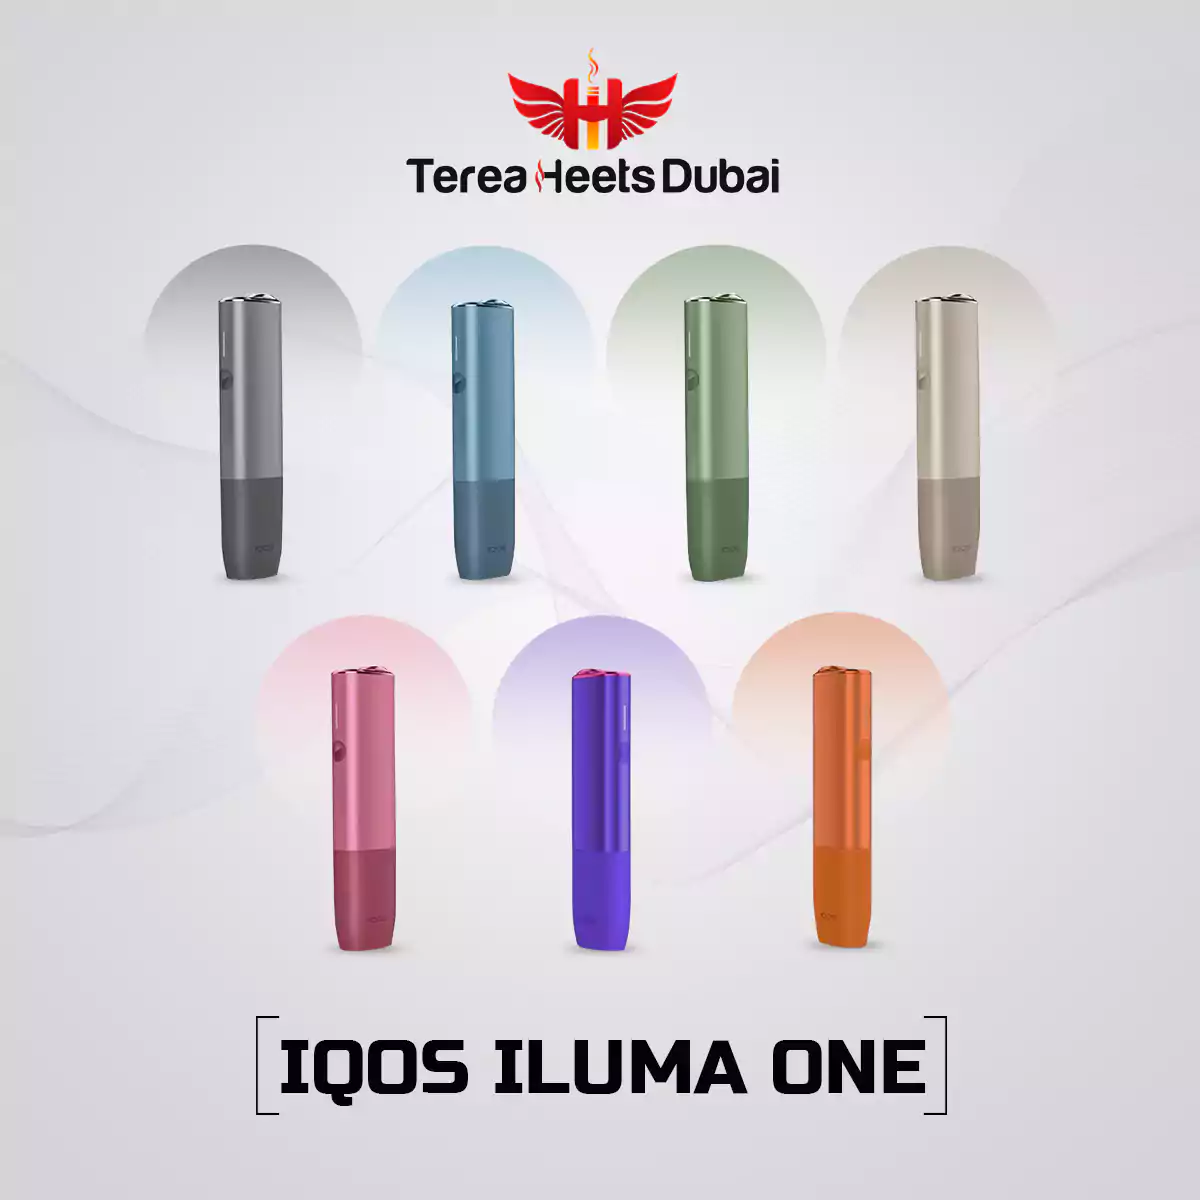 Best IQOS iluma One Kit WE Limited Edition Price in Dubai